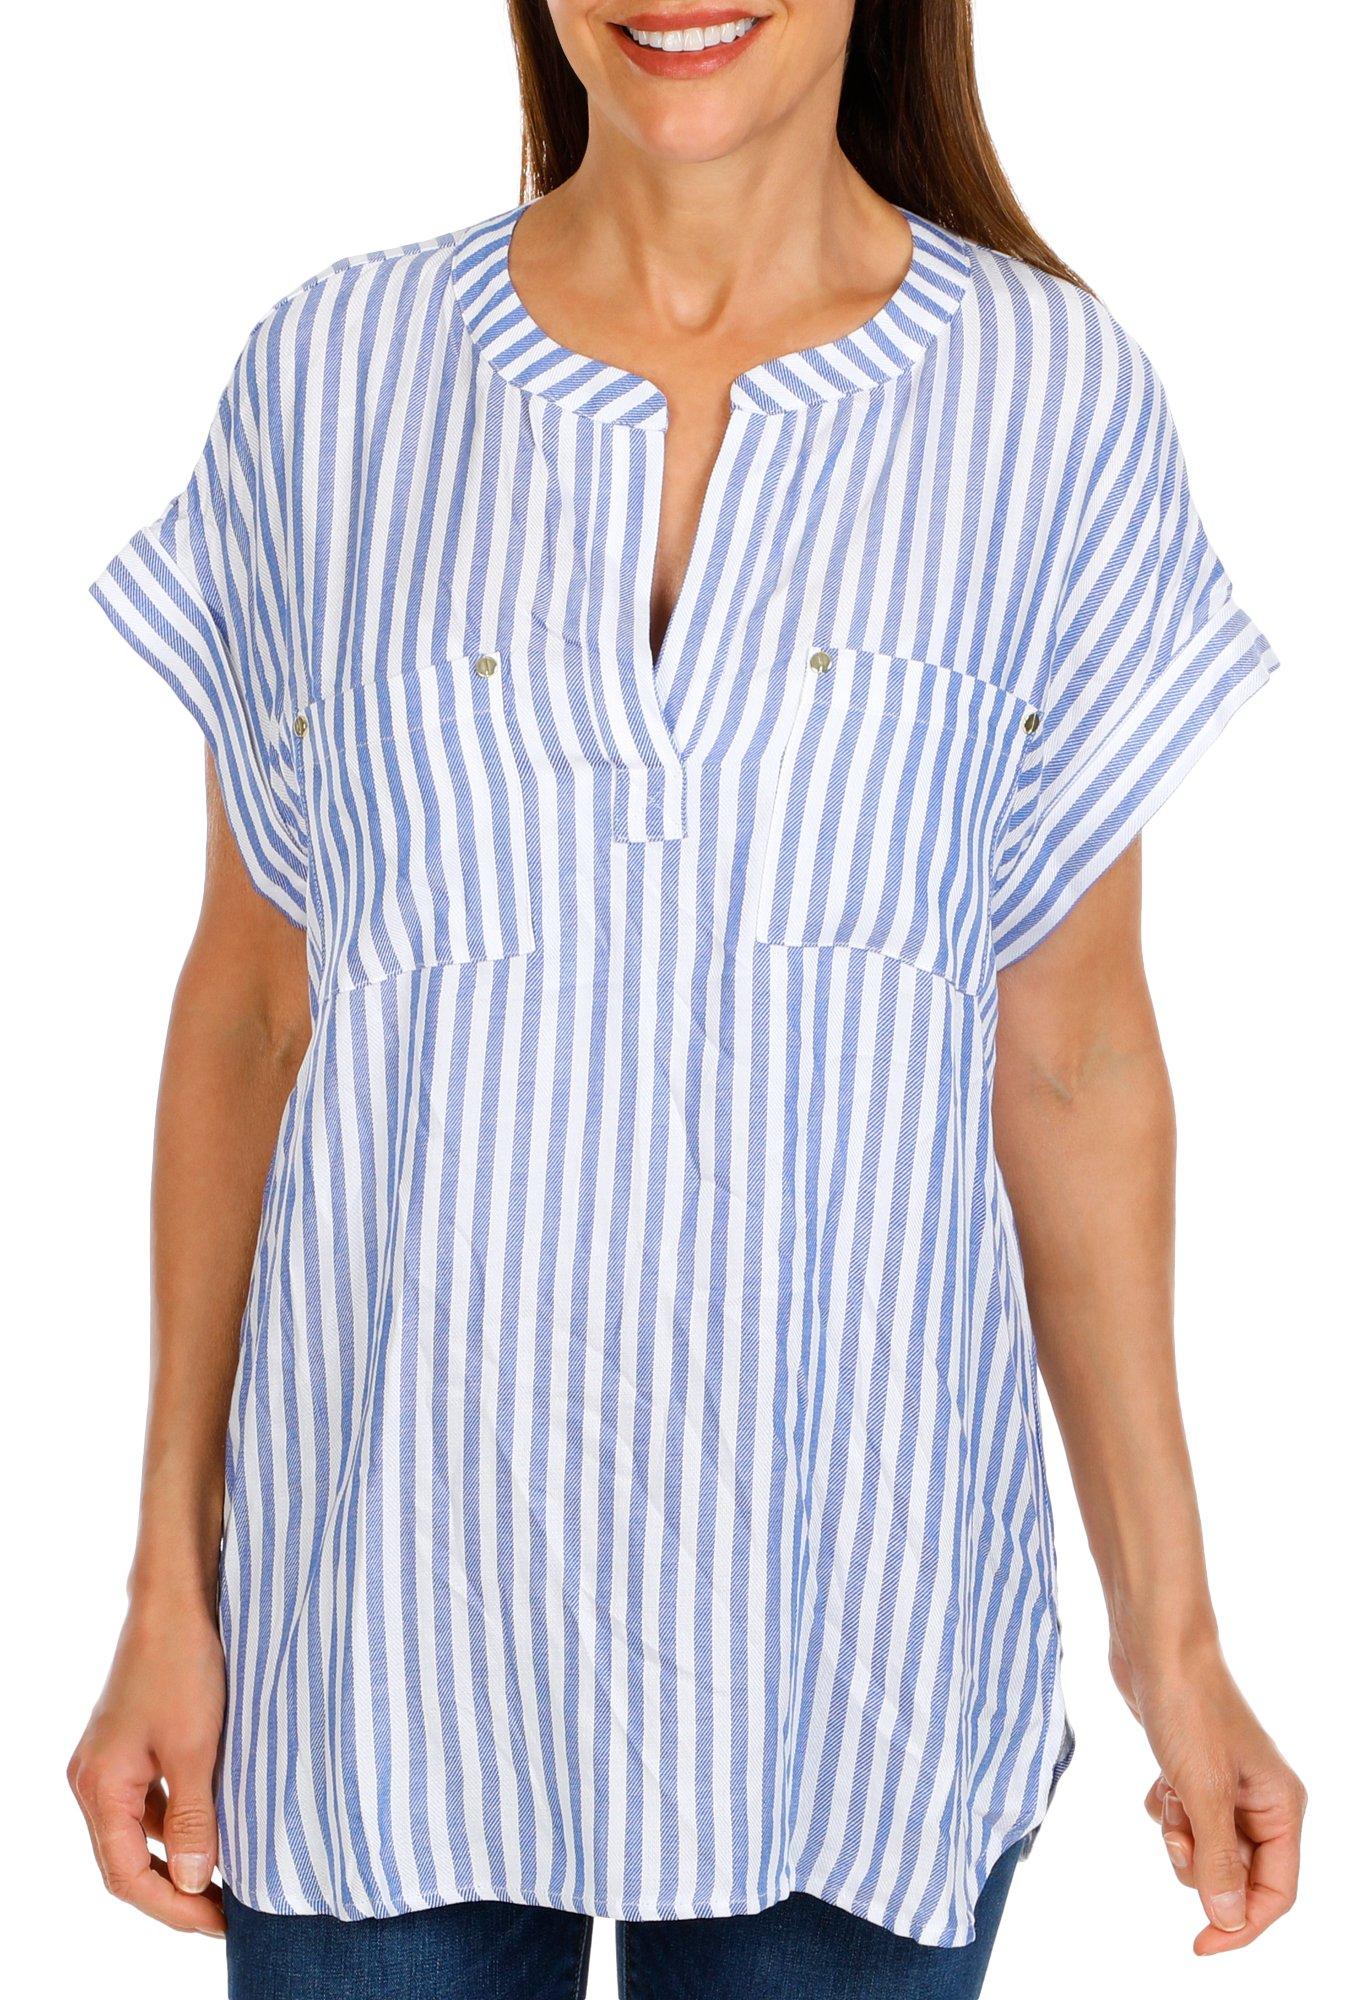 Women's Short Sleeve Striped Blouse